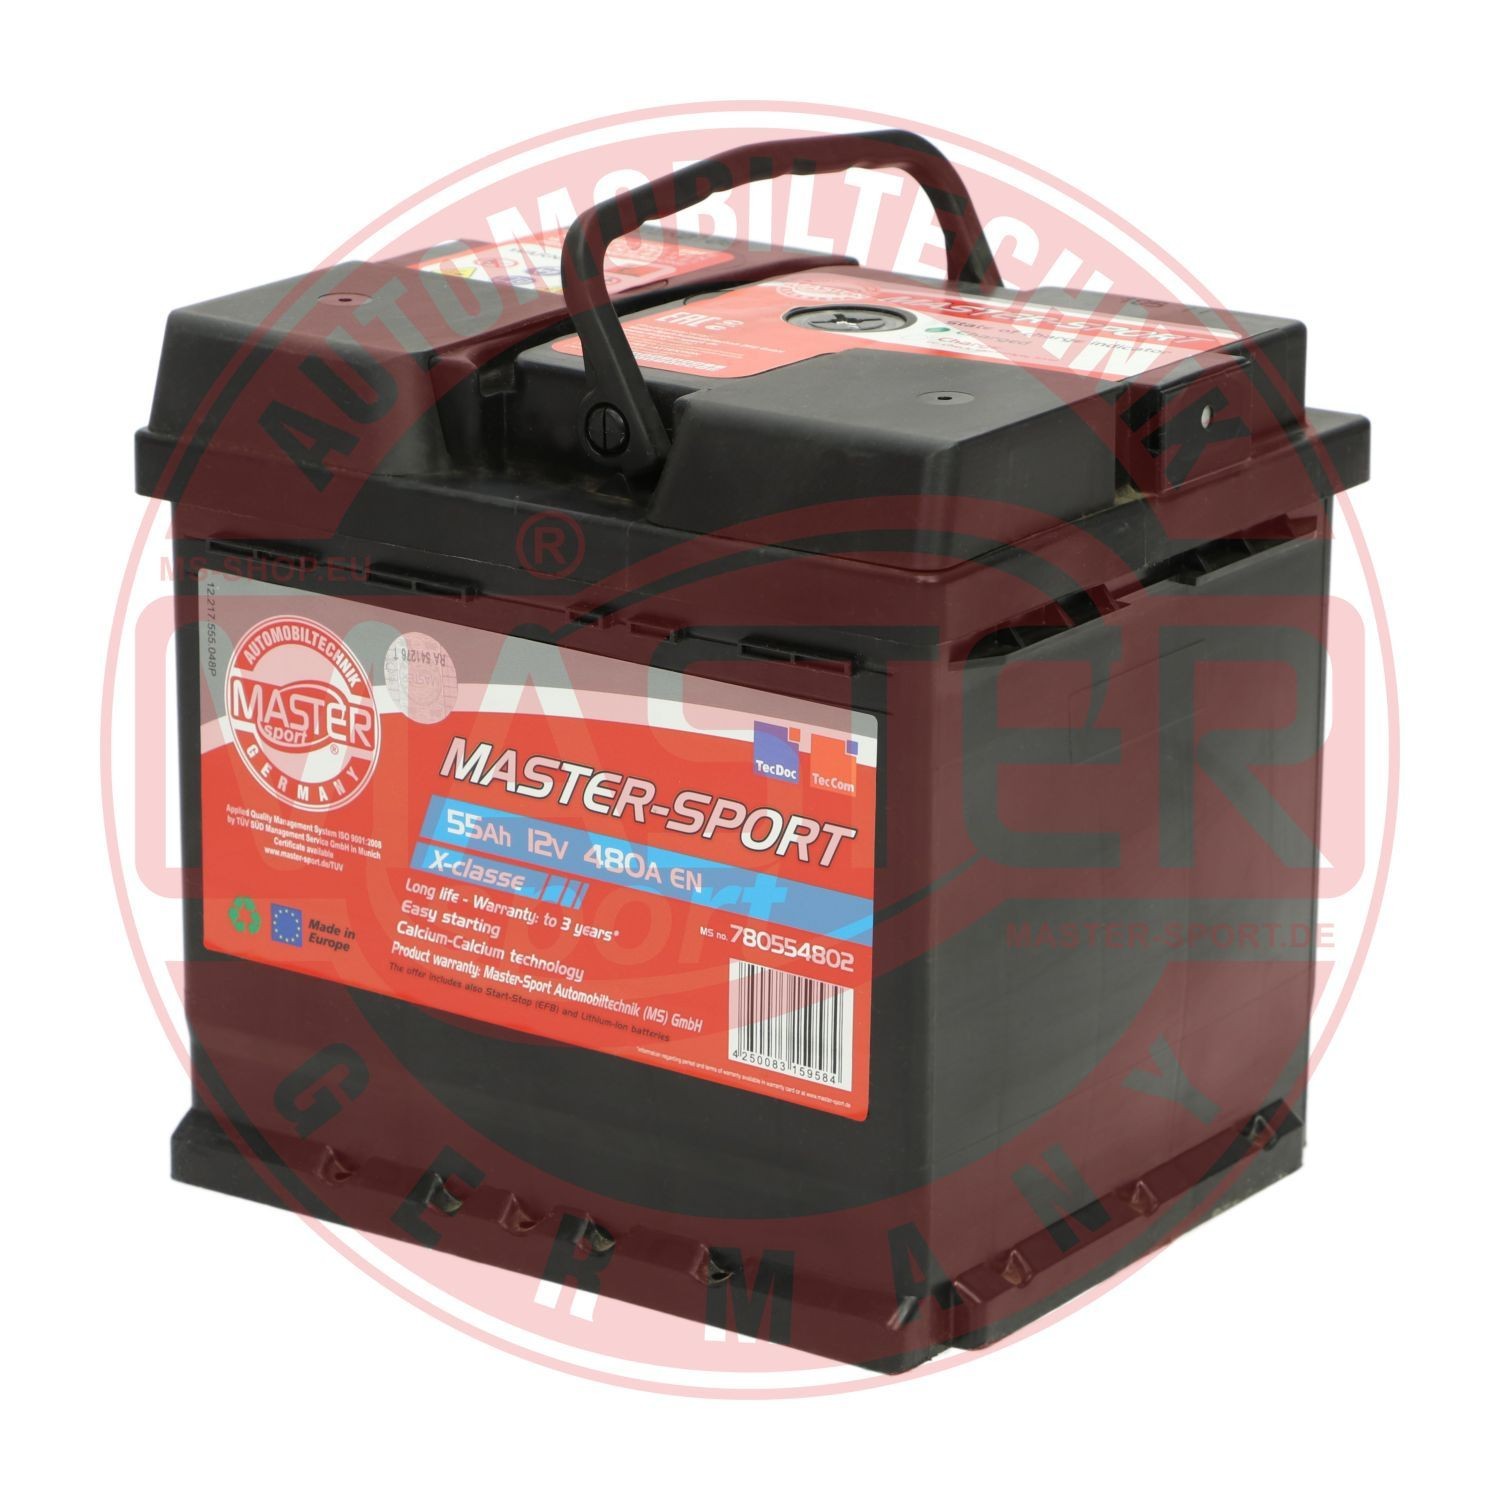 780554802 MASTER-SPORT Car battery SMART 12V 55Ah 480A B13 L1 Lead-acid battery